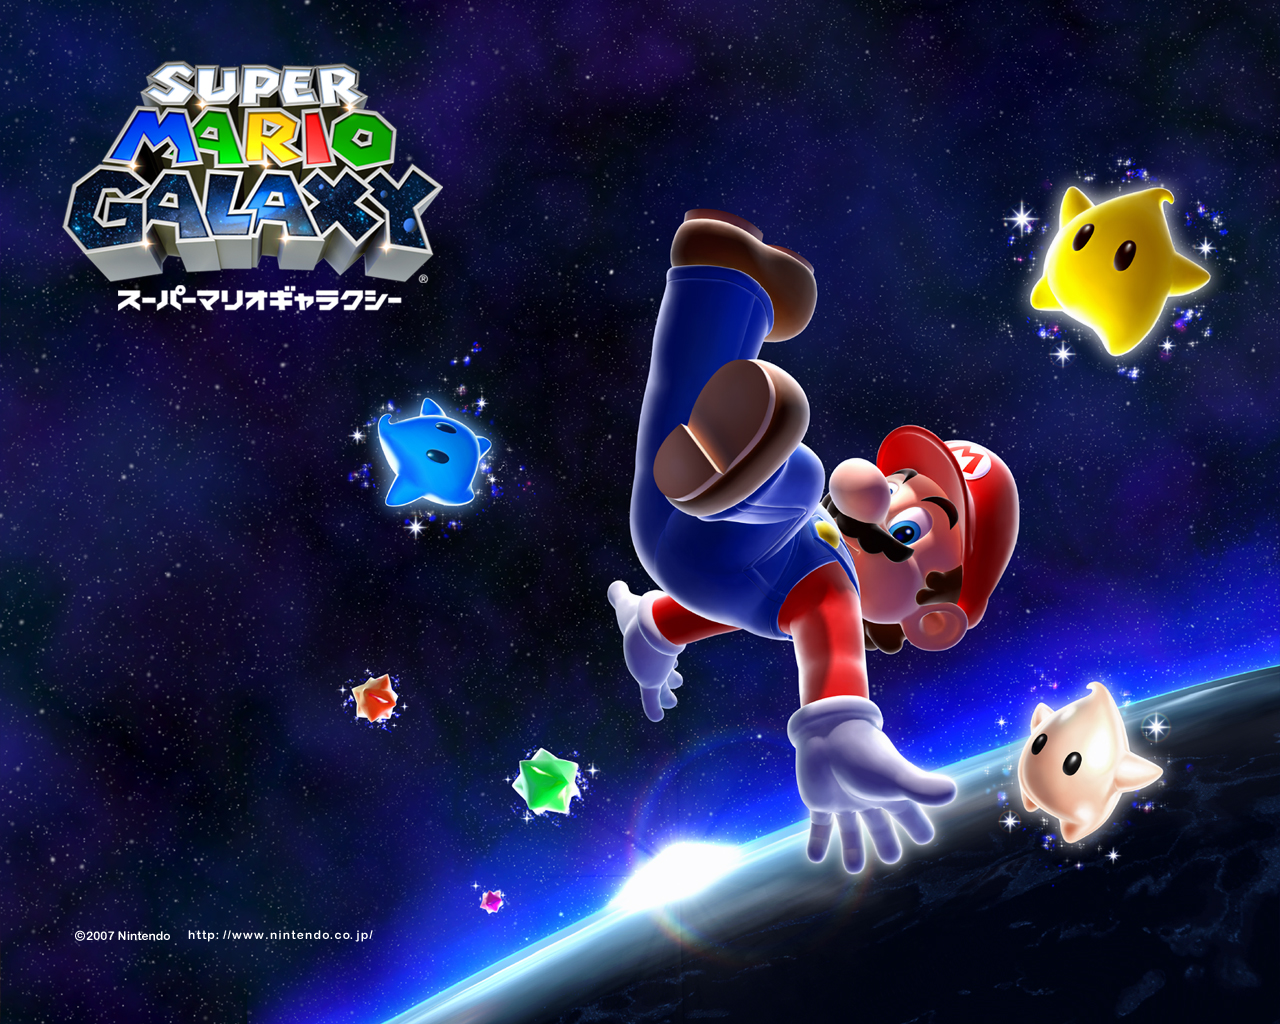 Tmk Downloads Images Super Mario Galaxy Wii